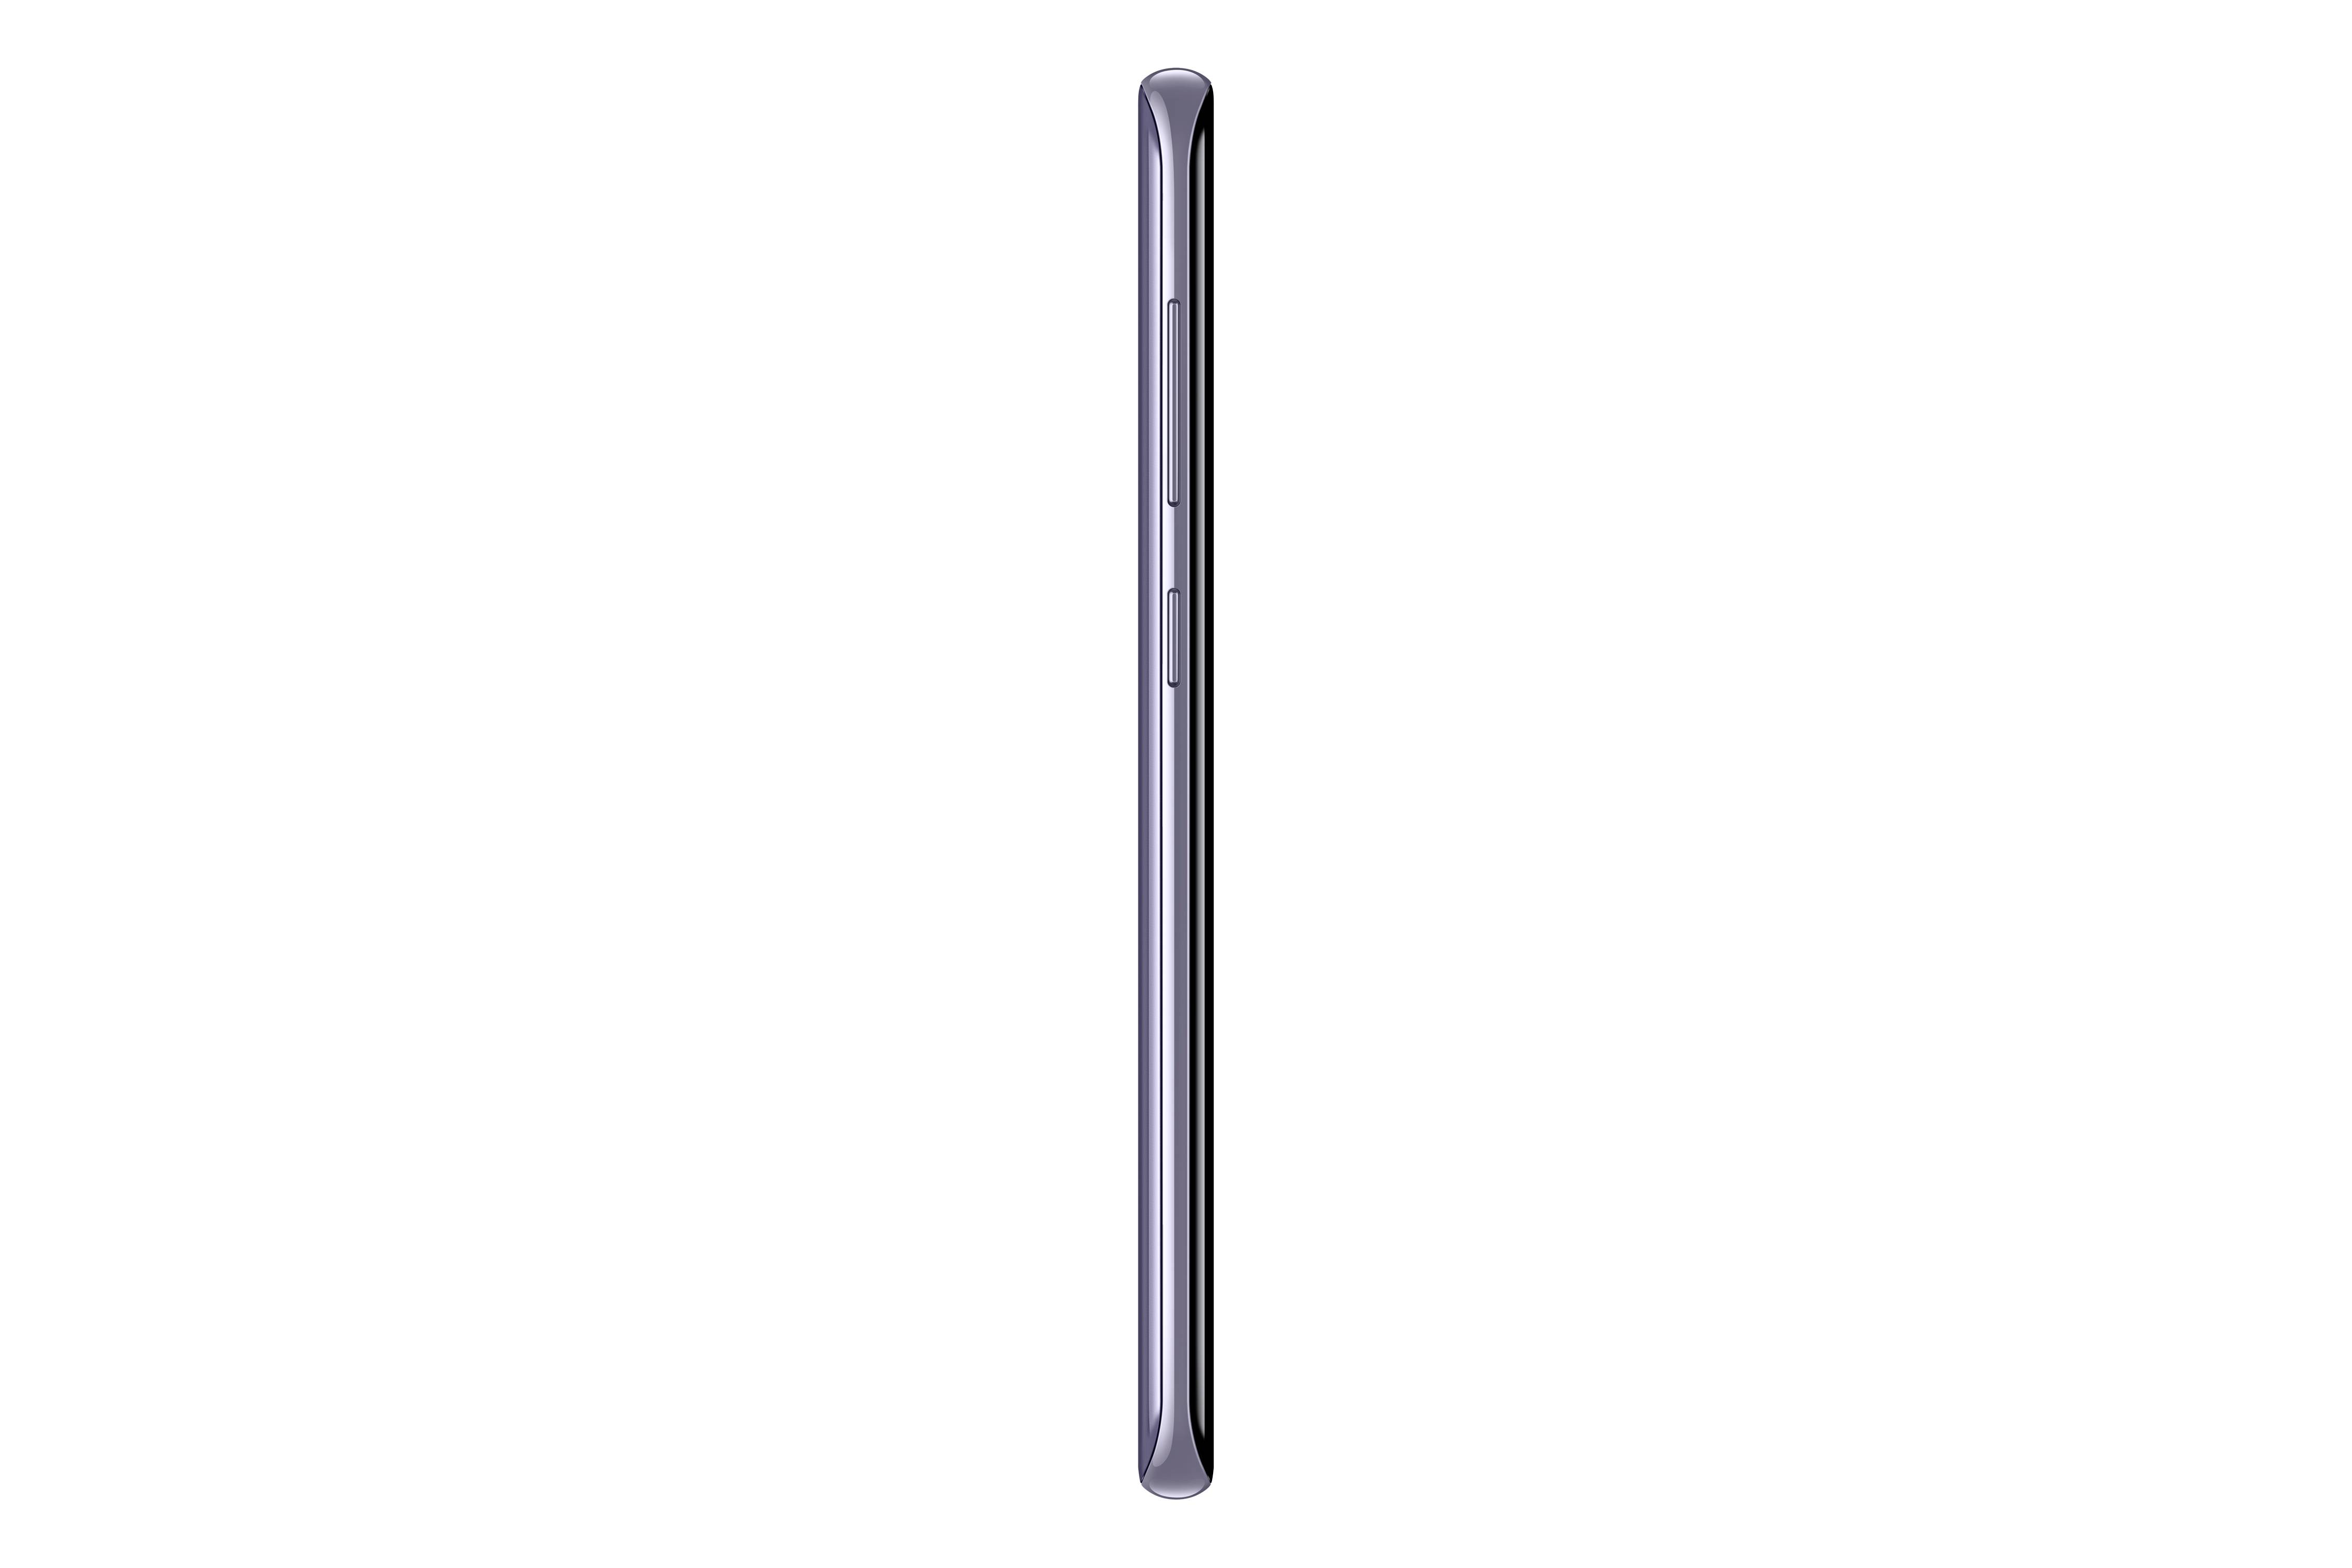 Samsung SM-G950UZVASPR 64GB Orchid Gray Galaxy S8 Smartphone (Sprint) - image 1 of 6